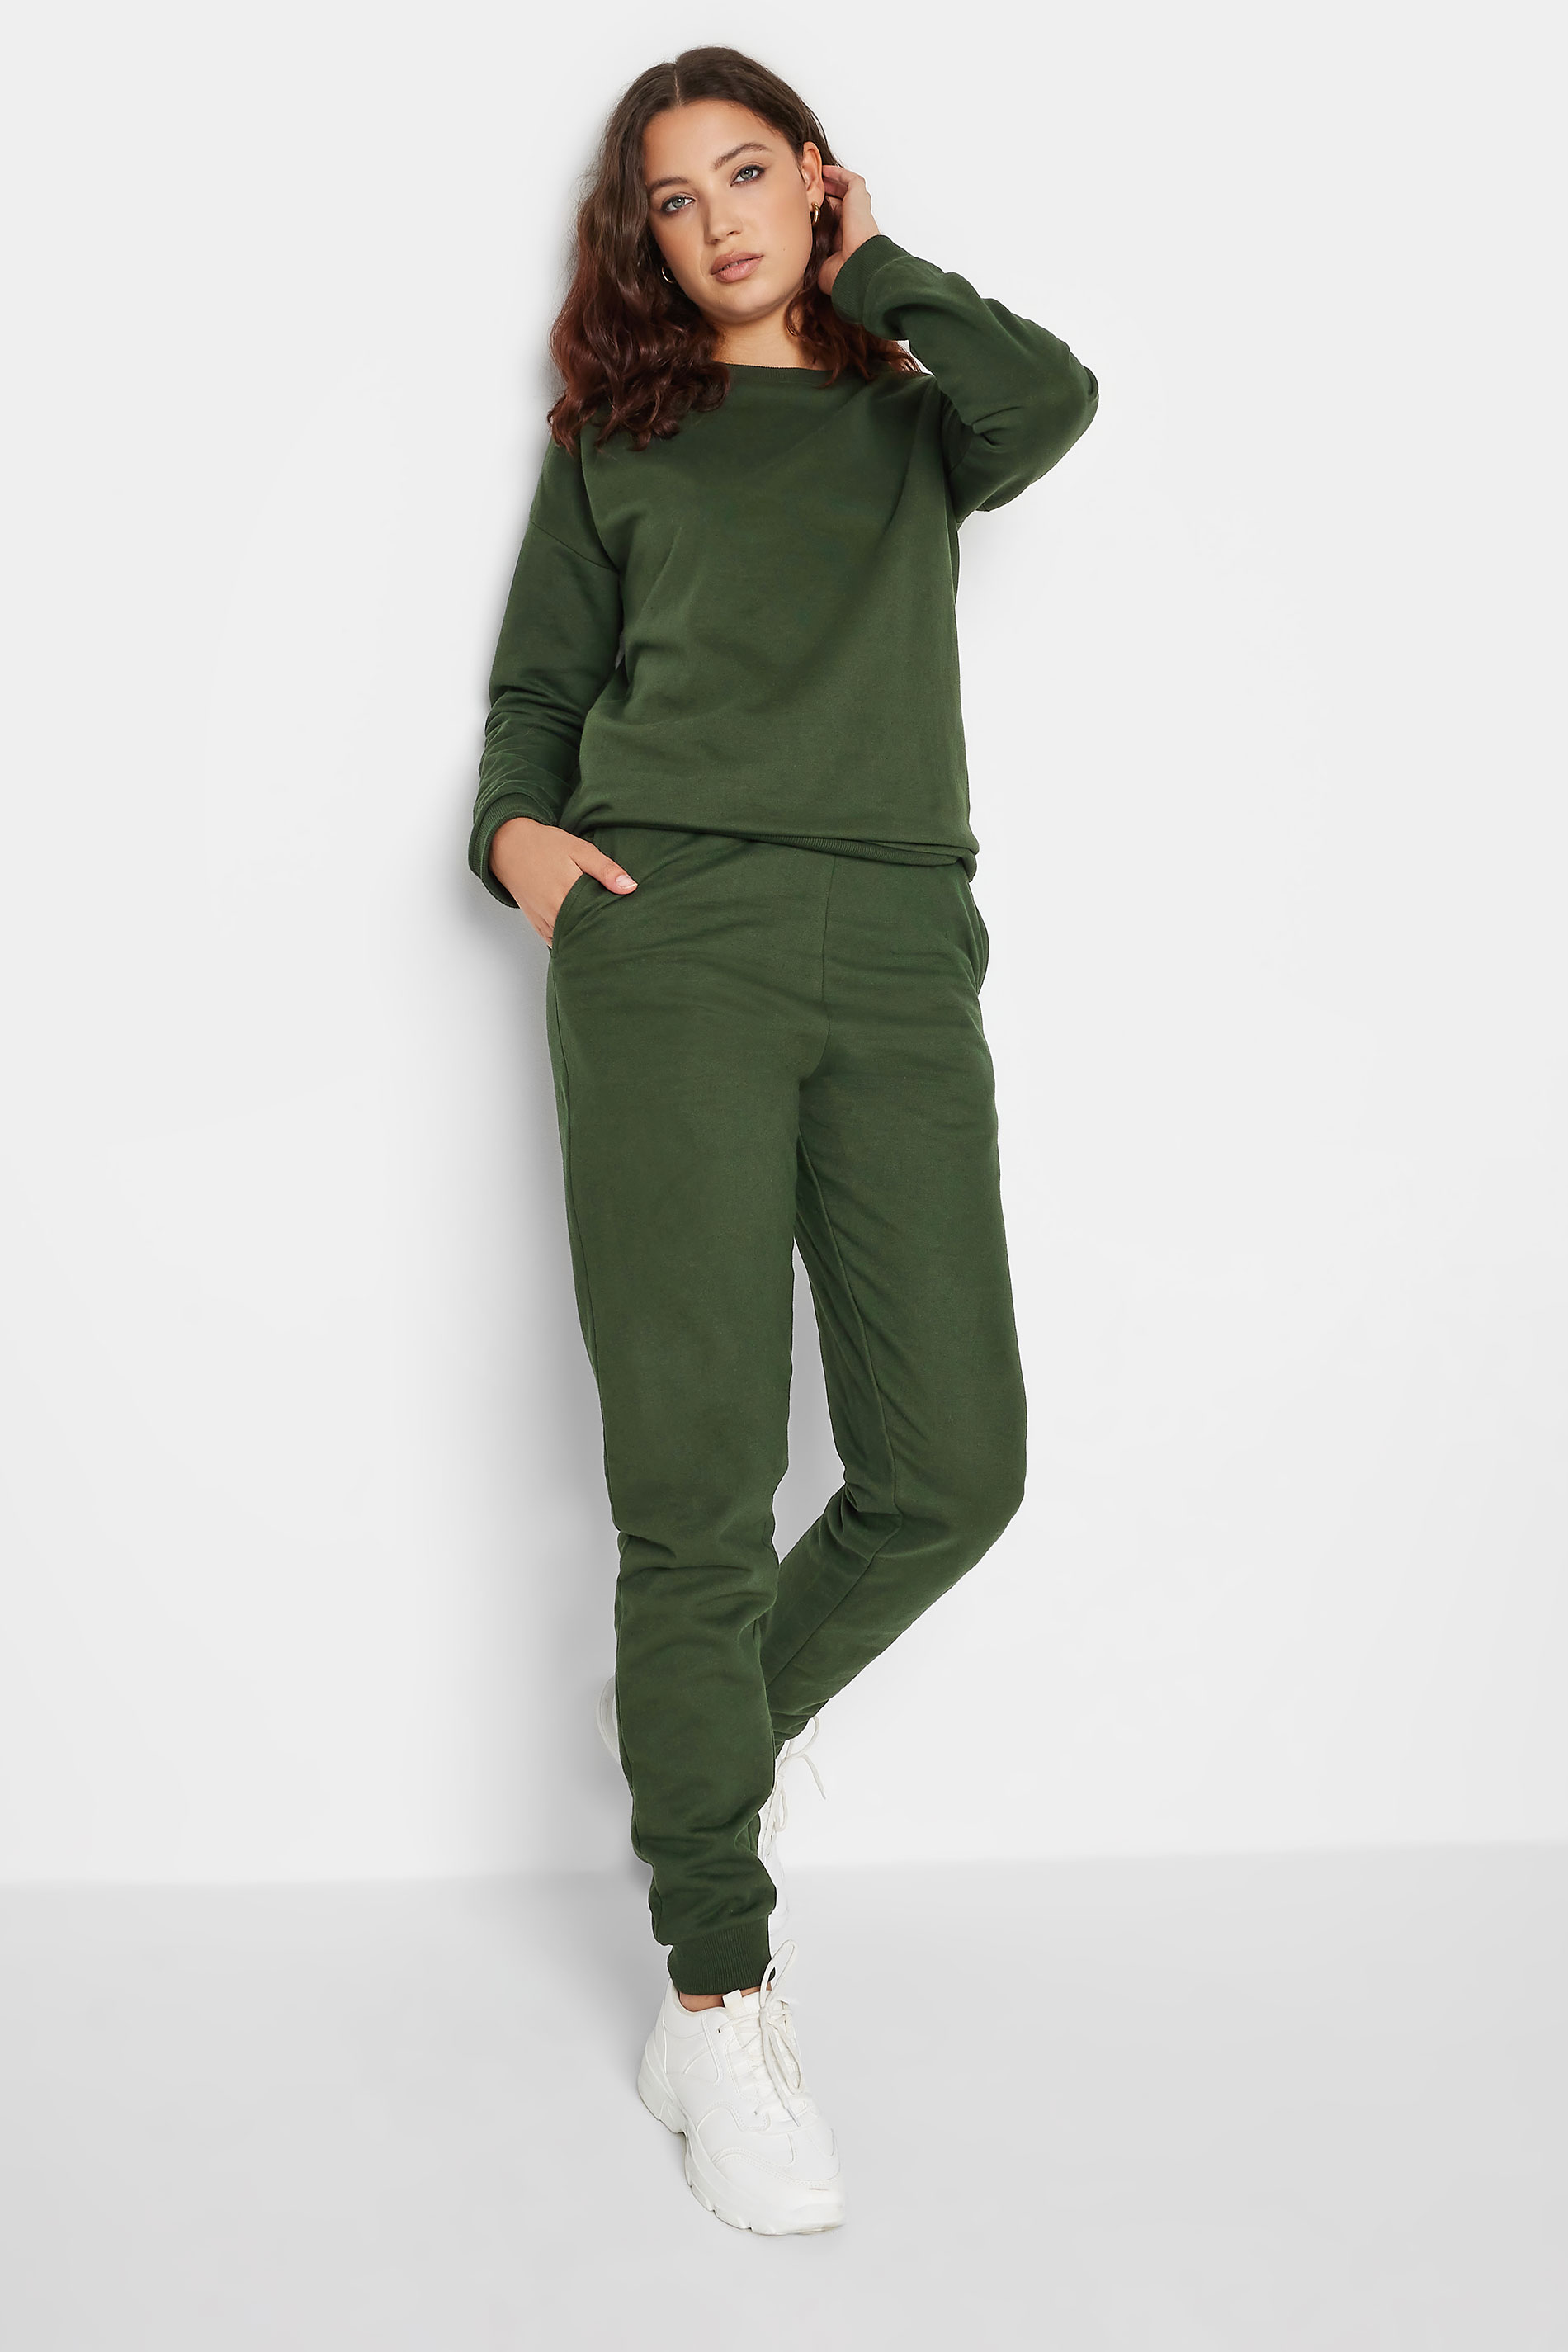 LTS Tall Khaki Green Long Sleeve Sweatshirt | Long Tall Sally  2